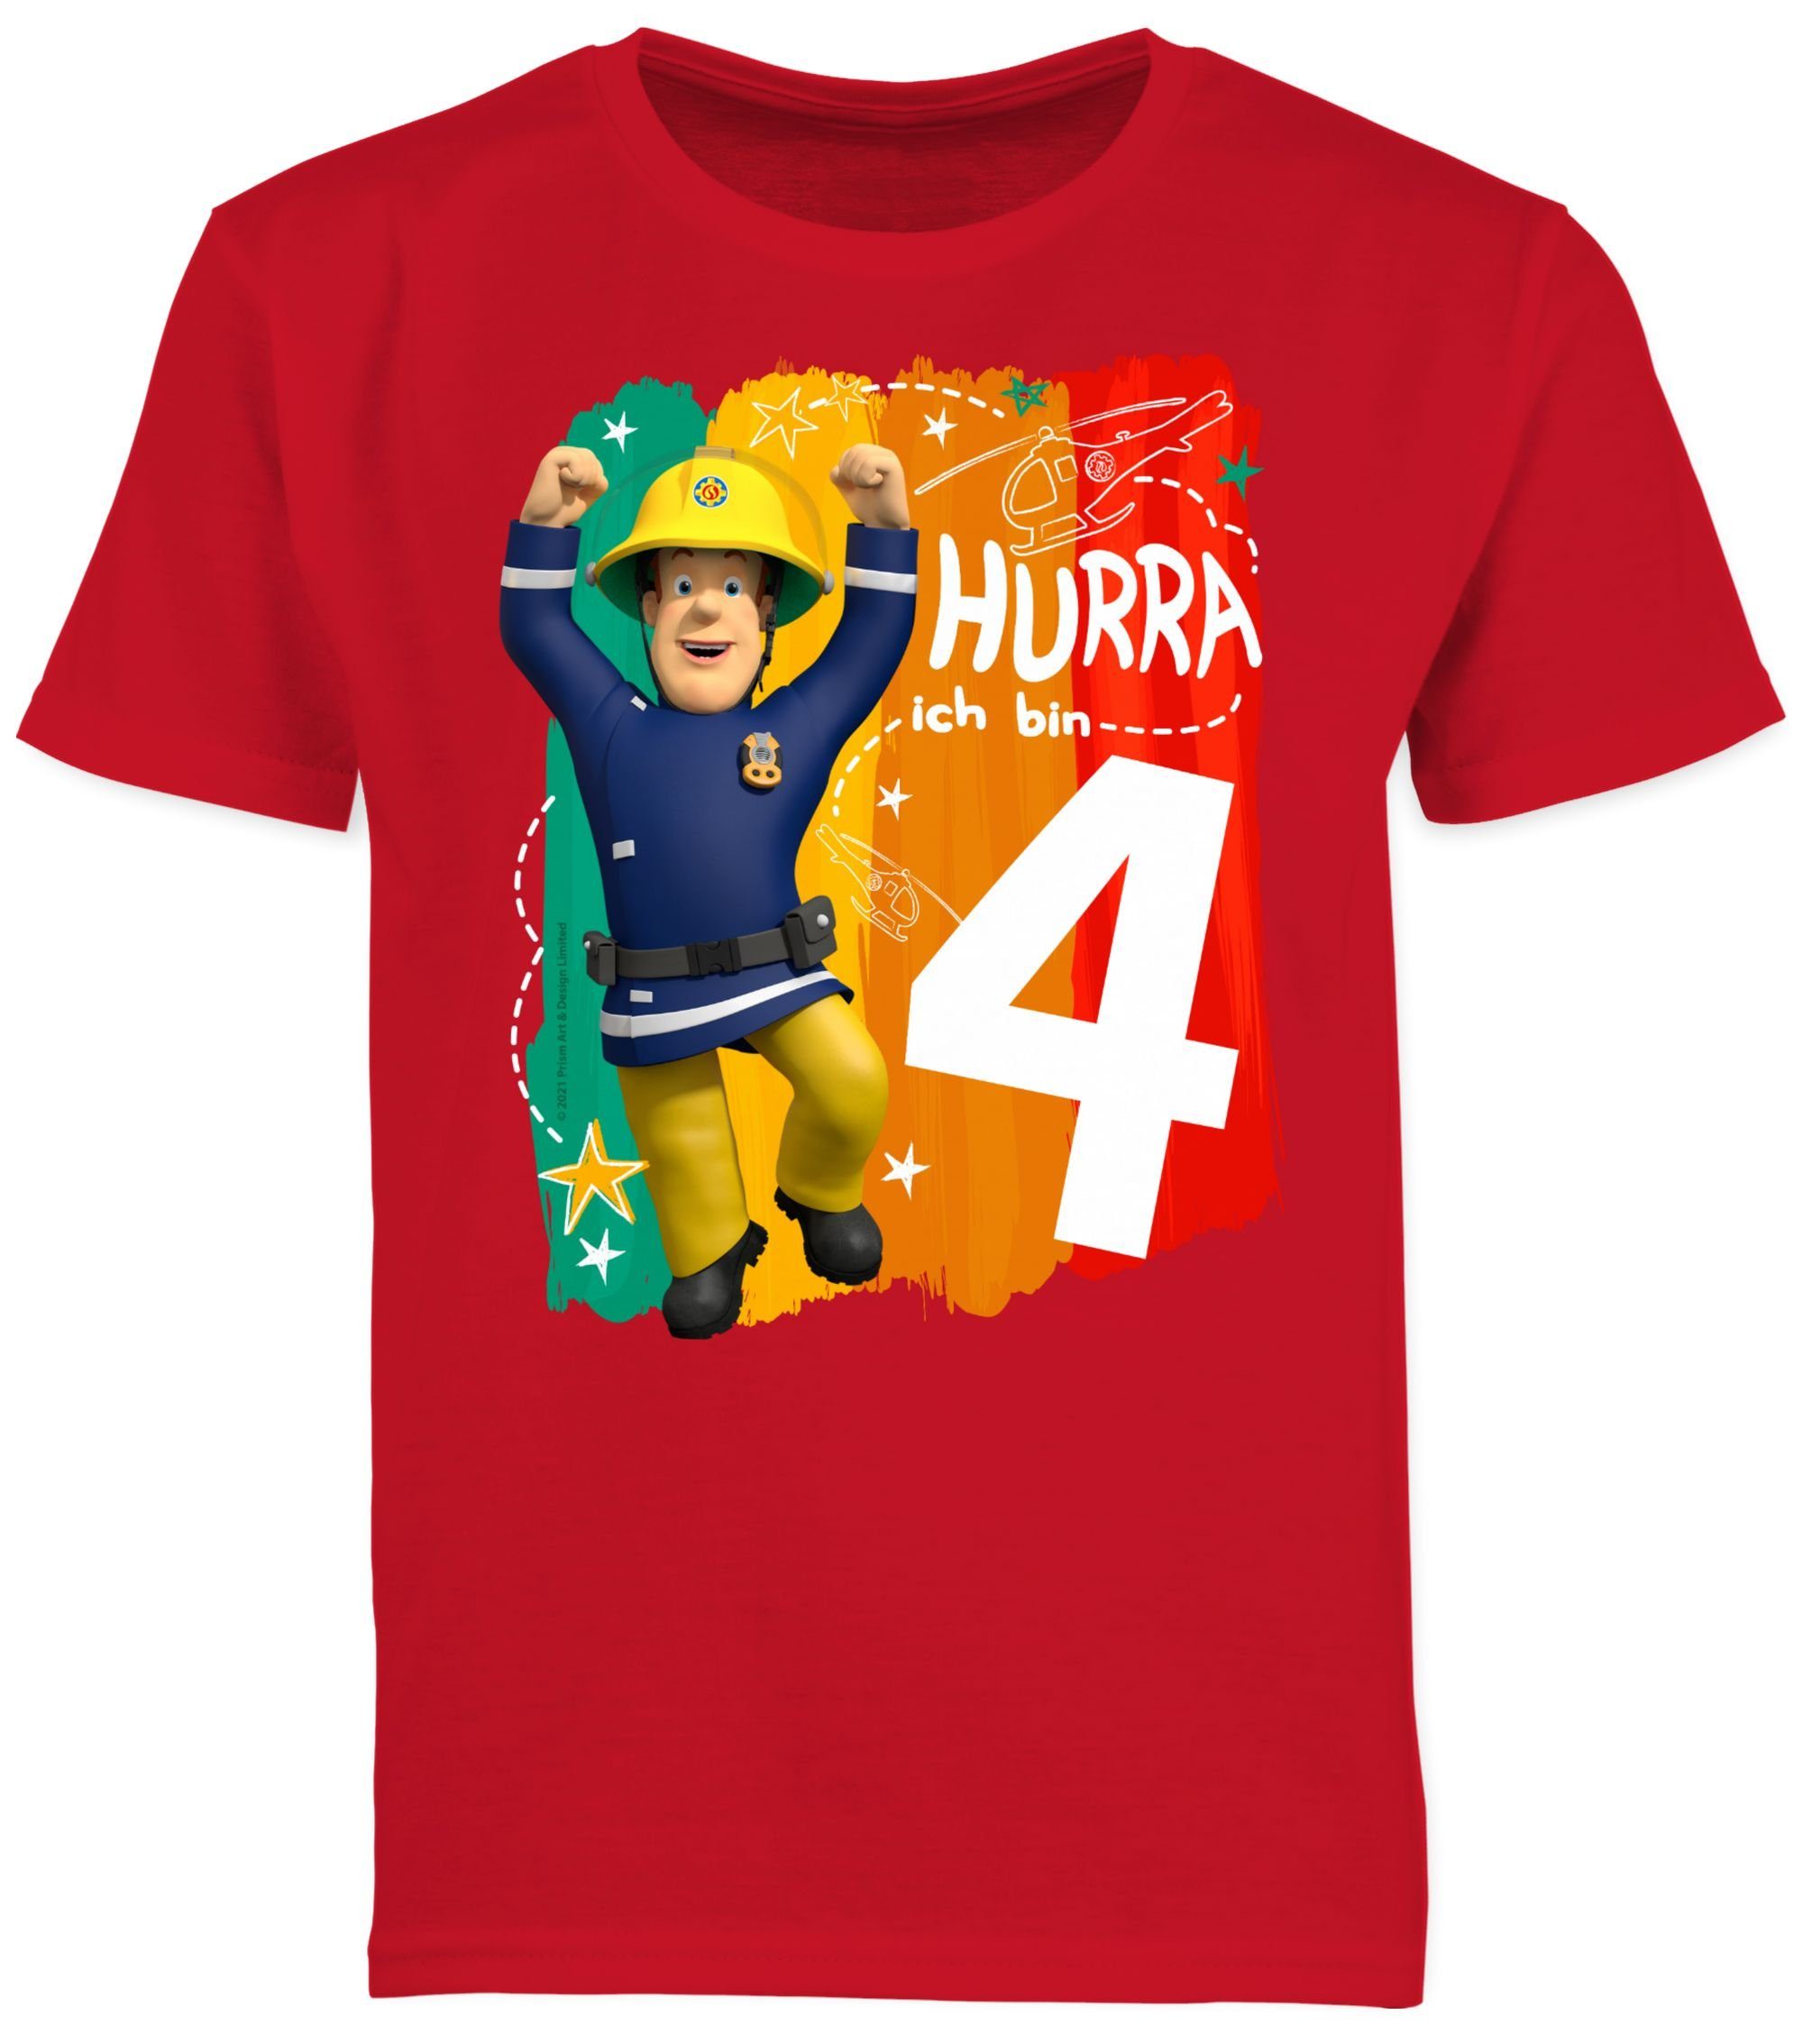 Jungen Vier Hurra Rot T-Shirt bin ich Sam Sam Feuerwehrmann Shirtracer 01 -